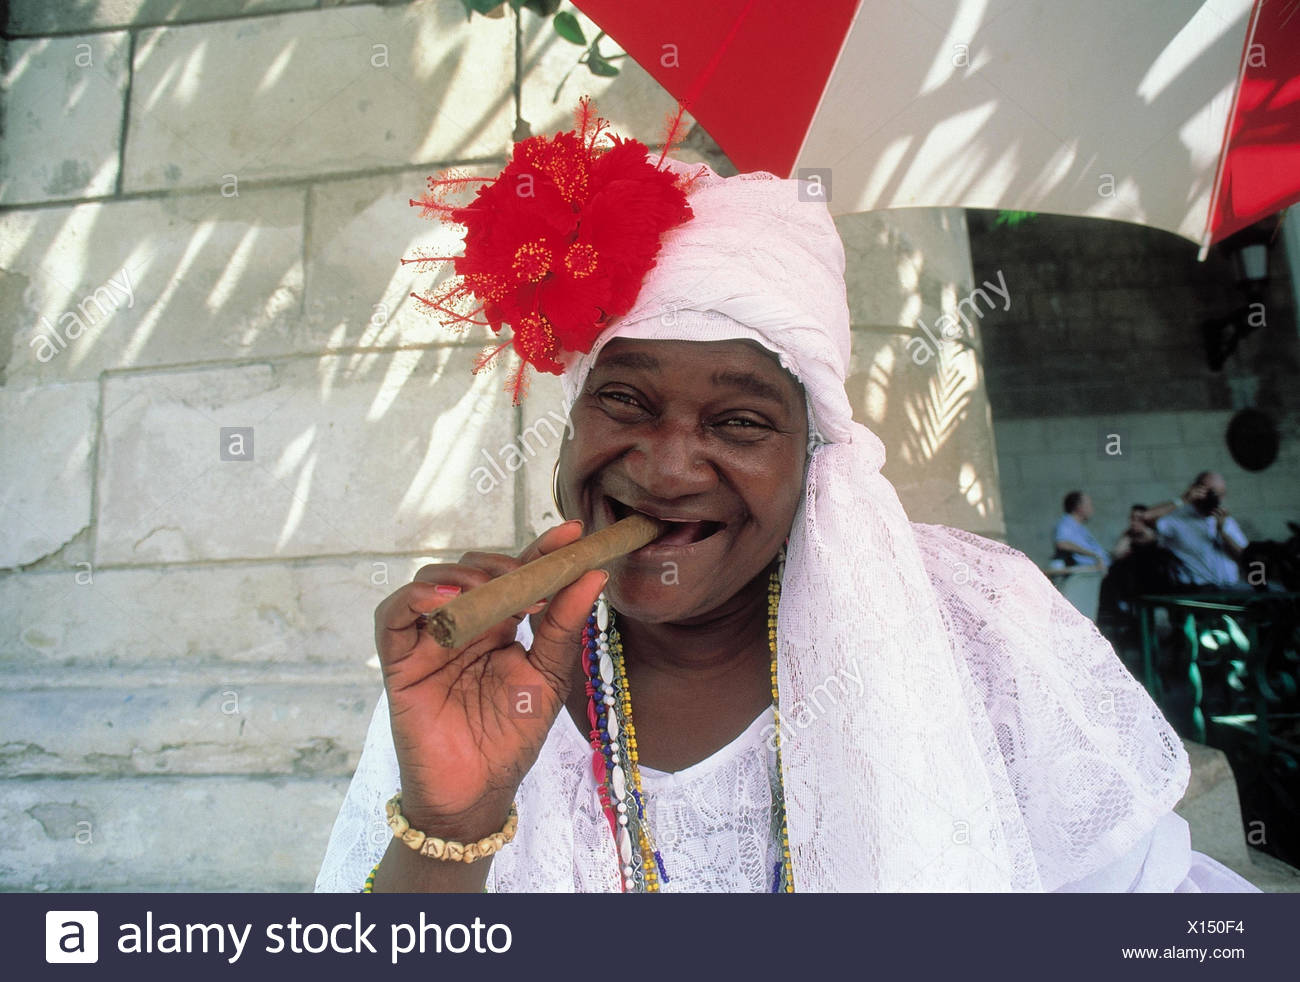 Cuba, Havana, woman, laugh, smoke cigar, portrait smile outside, Cuban,  locals, swarthy, non-whites, folklore, clothes, traditionally, nicotine  Stock Photo - Alamy